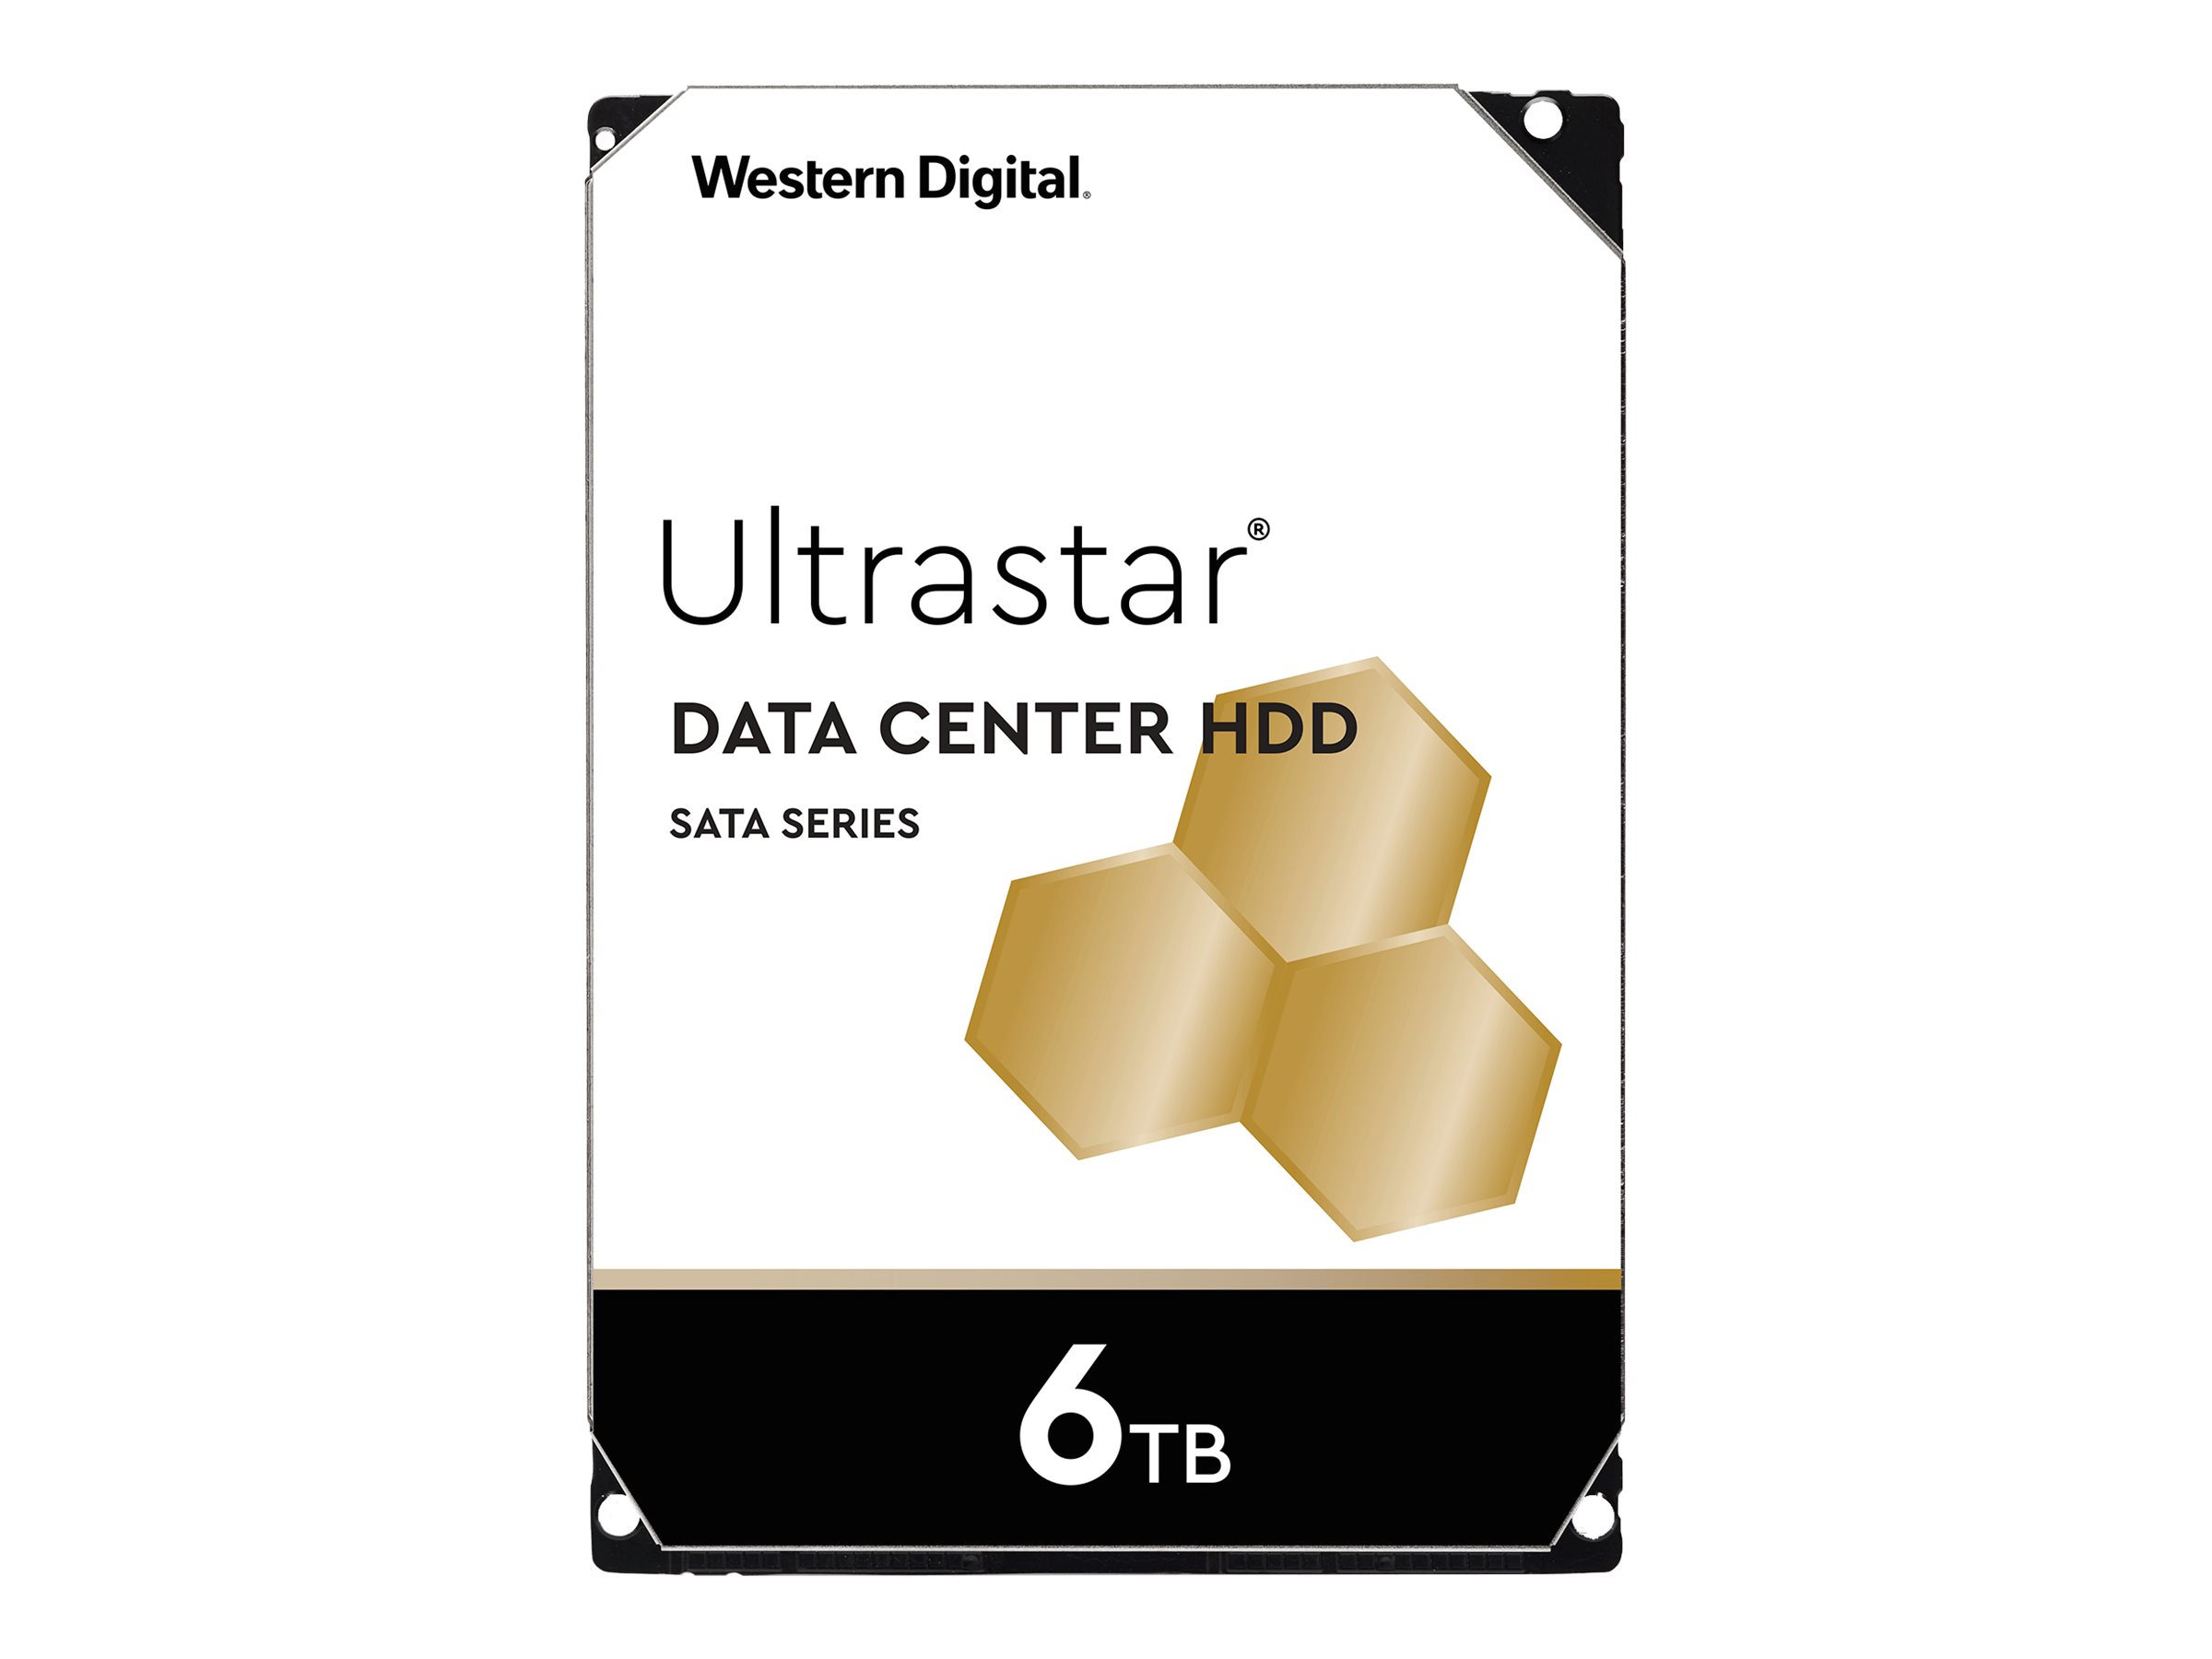 WD Ultrastar DC HC310 HUS726T6TALE6L4 - Festplatte - 6 TB - intern - 3.5" (8.9 cm)